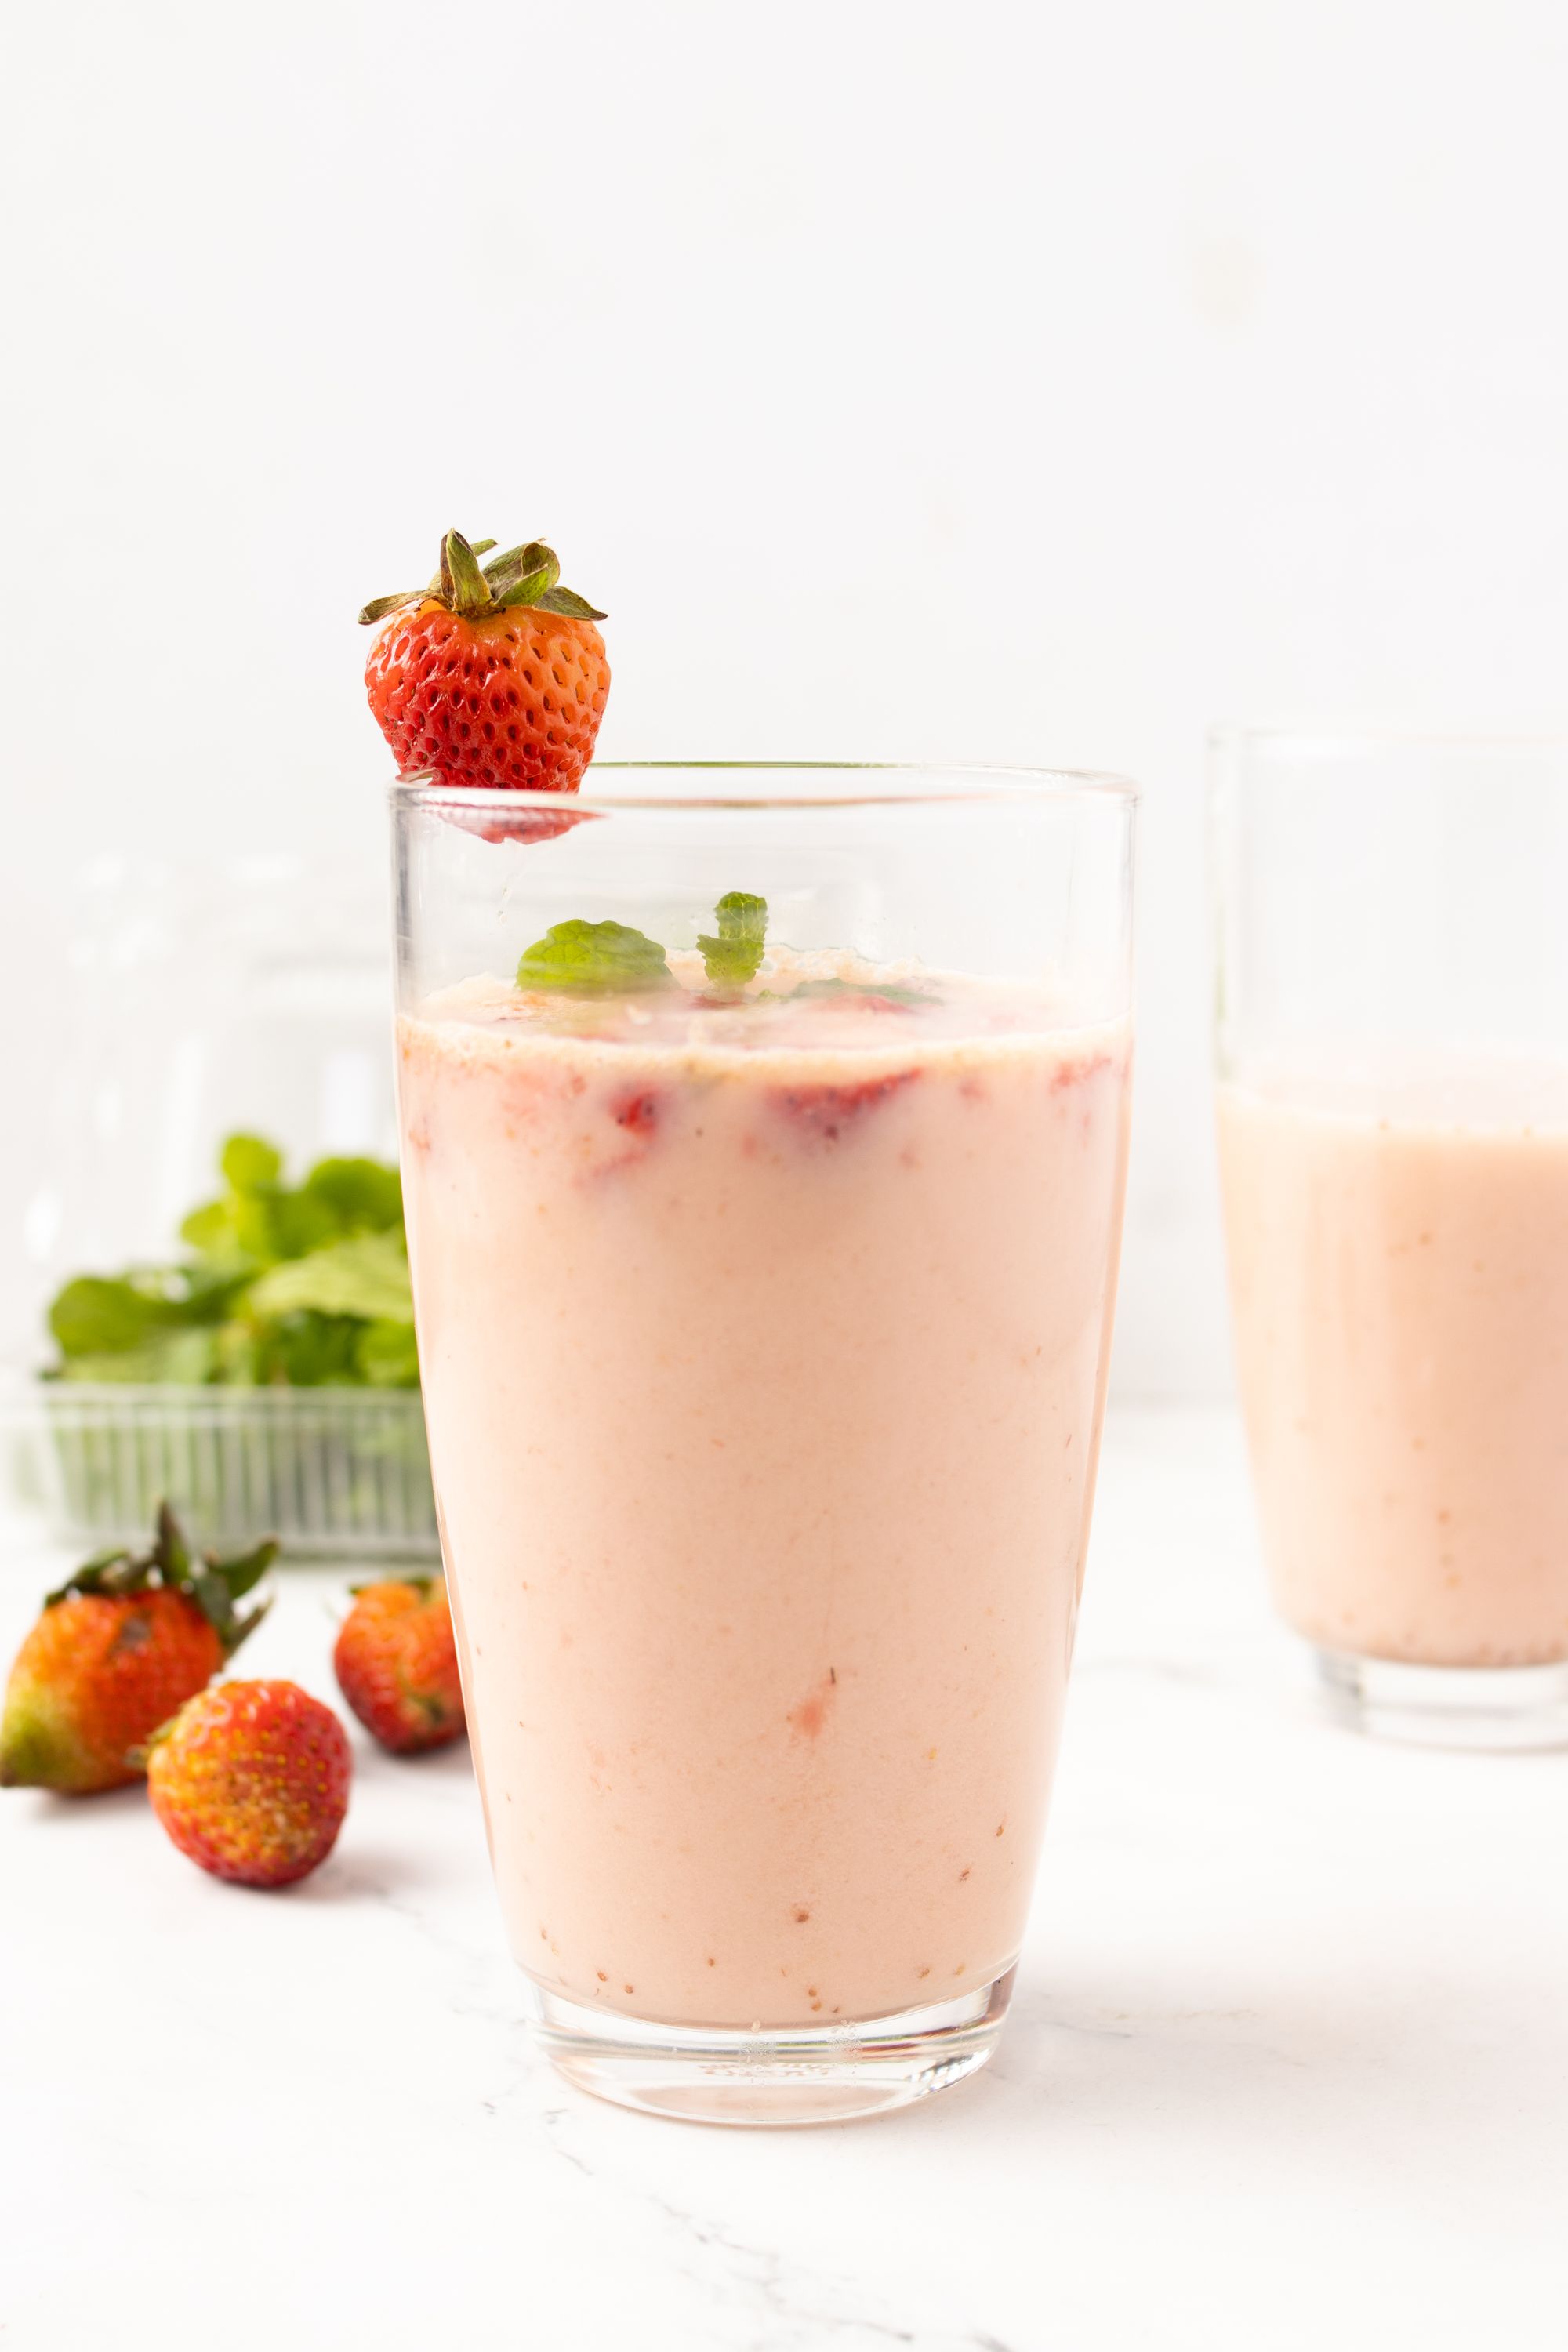 A glass of Vegan Strawberry Milk